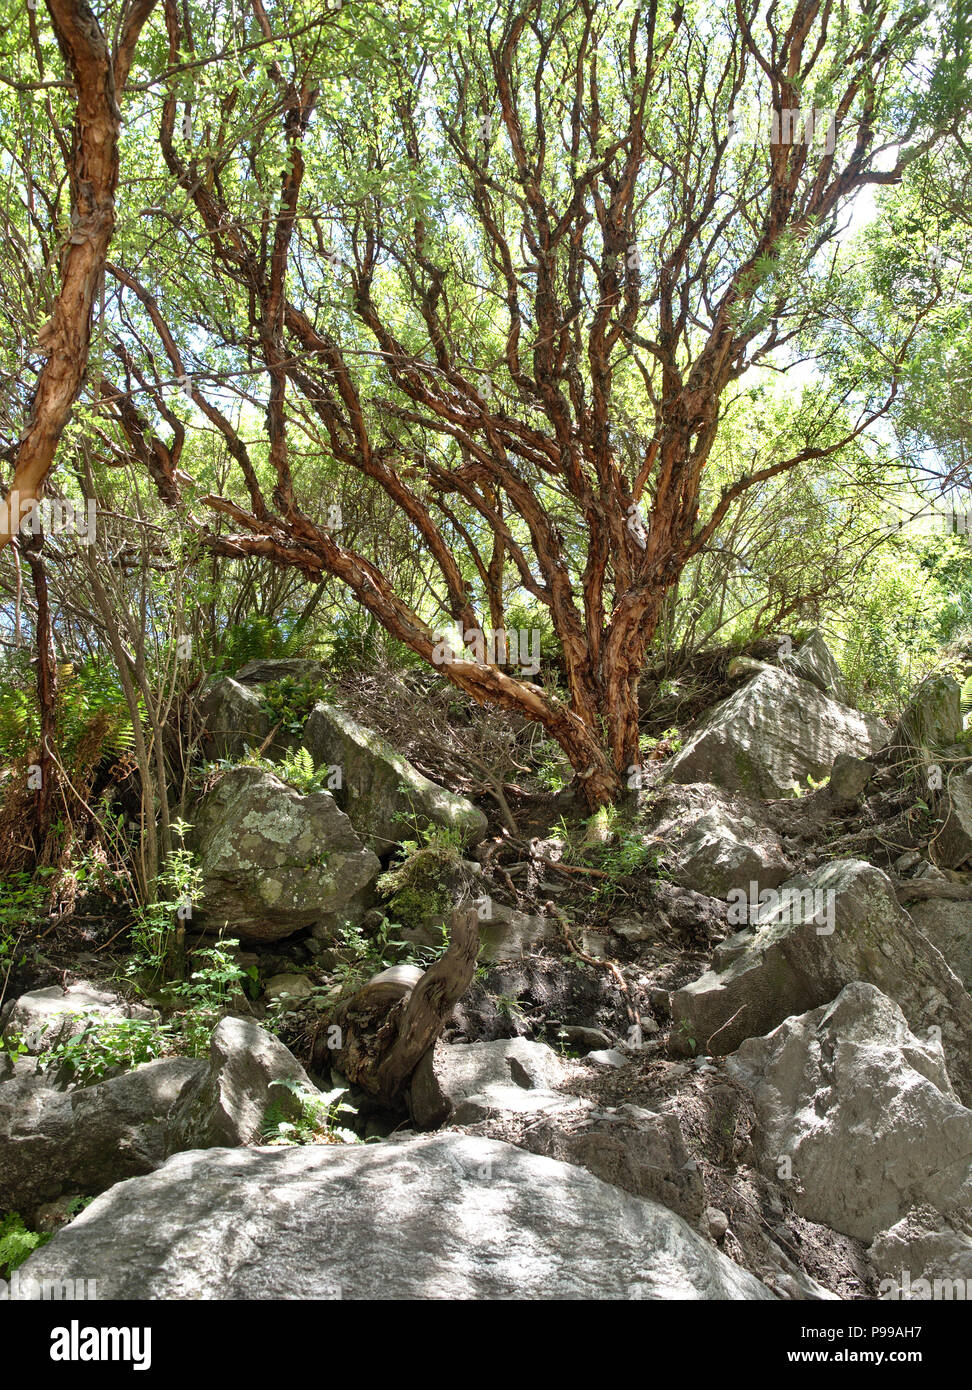 A tabaquillo tree (Polylepis australis) at nature reserve Reserva Florofaunistica de Rincón del Este, in Merlo, San Luis, Argentina. Stock Photo